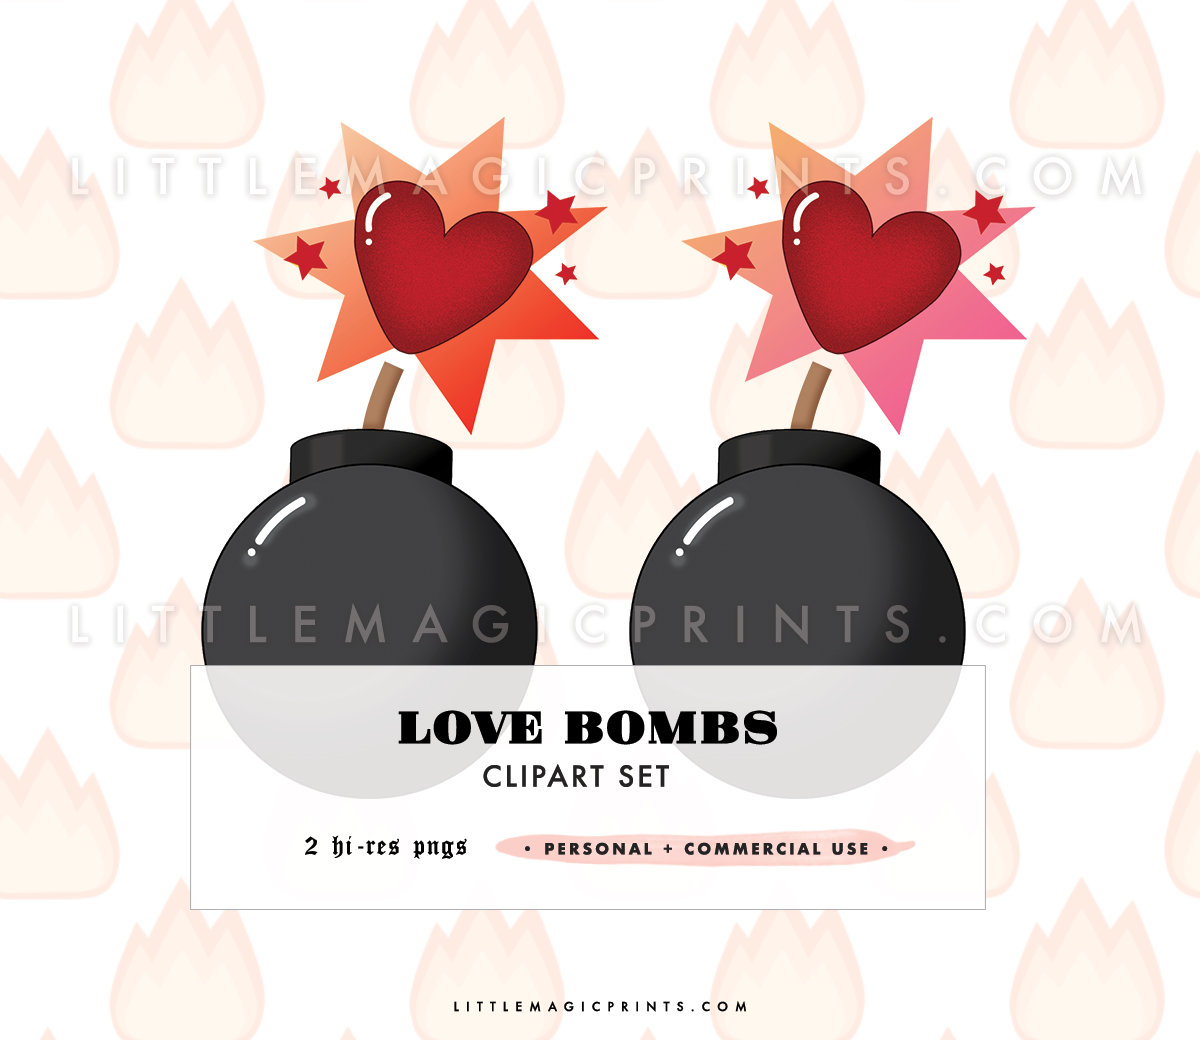 Bomb clipart bombshell. Love bombs set little